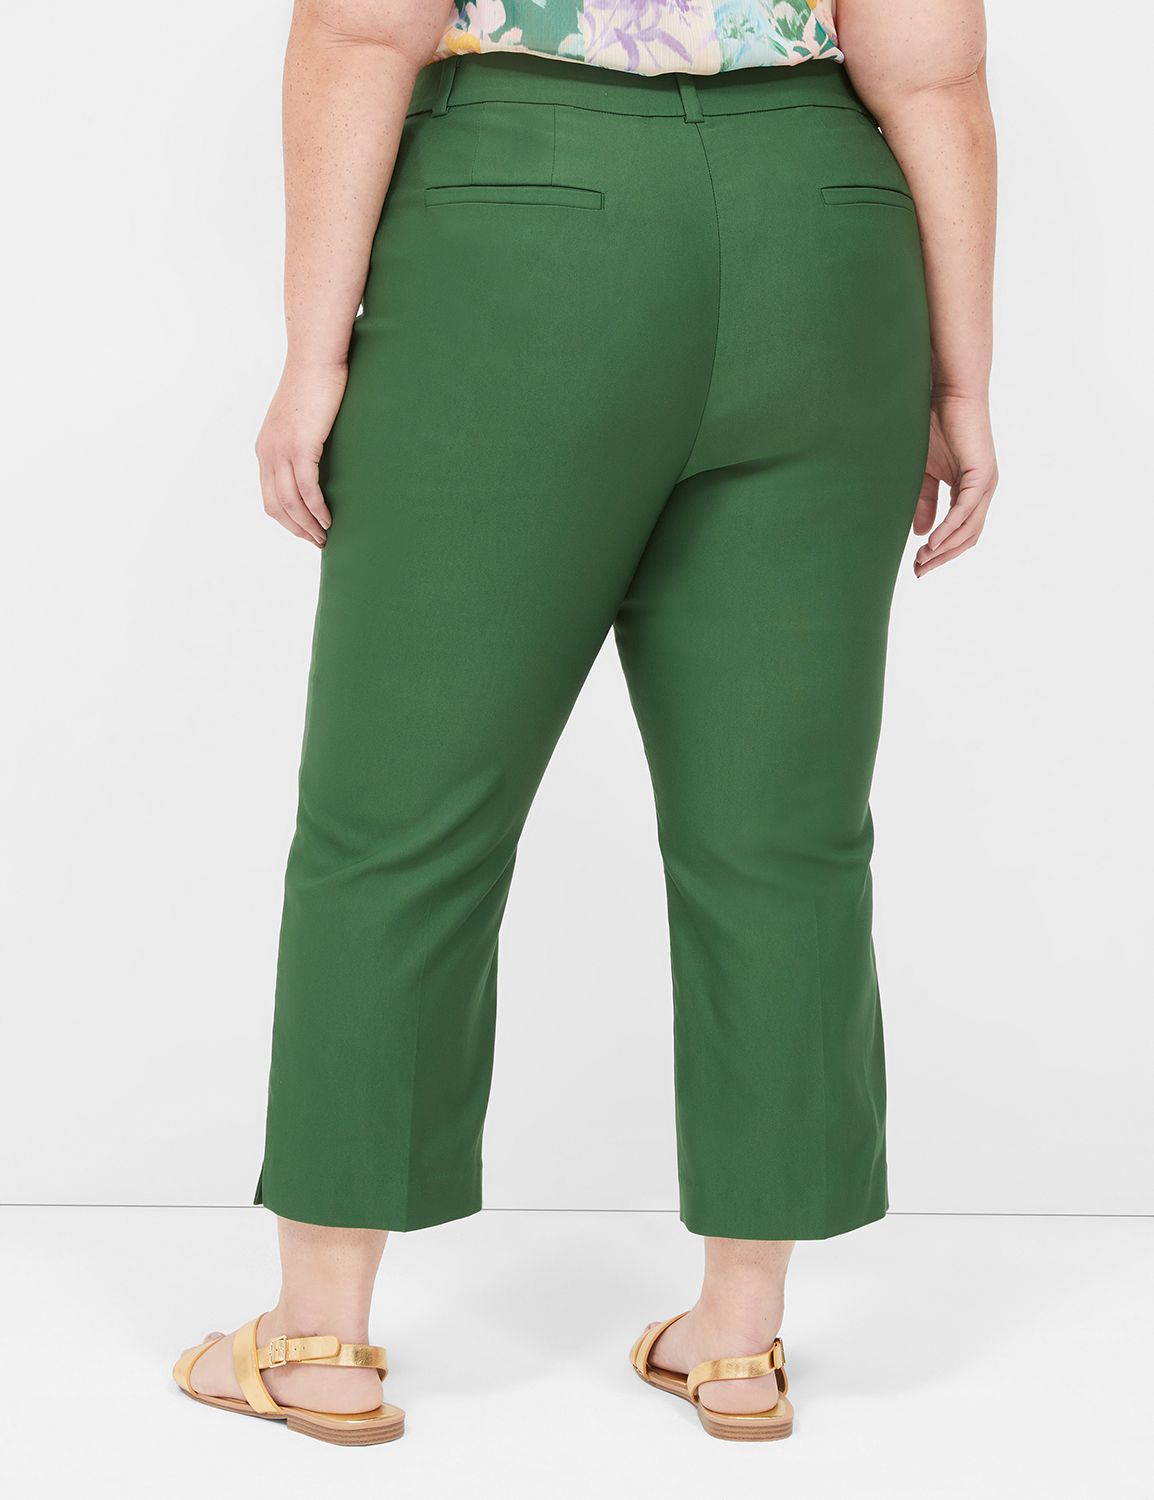 Free People Women's Green Capri Pants Green Size 12 – Steals